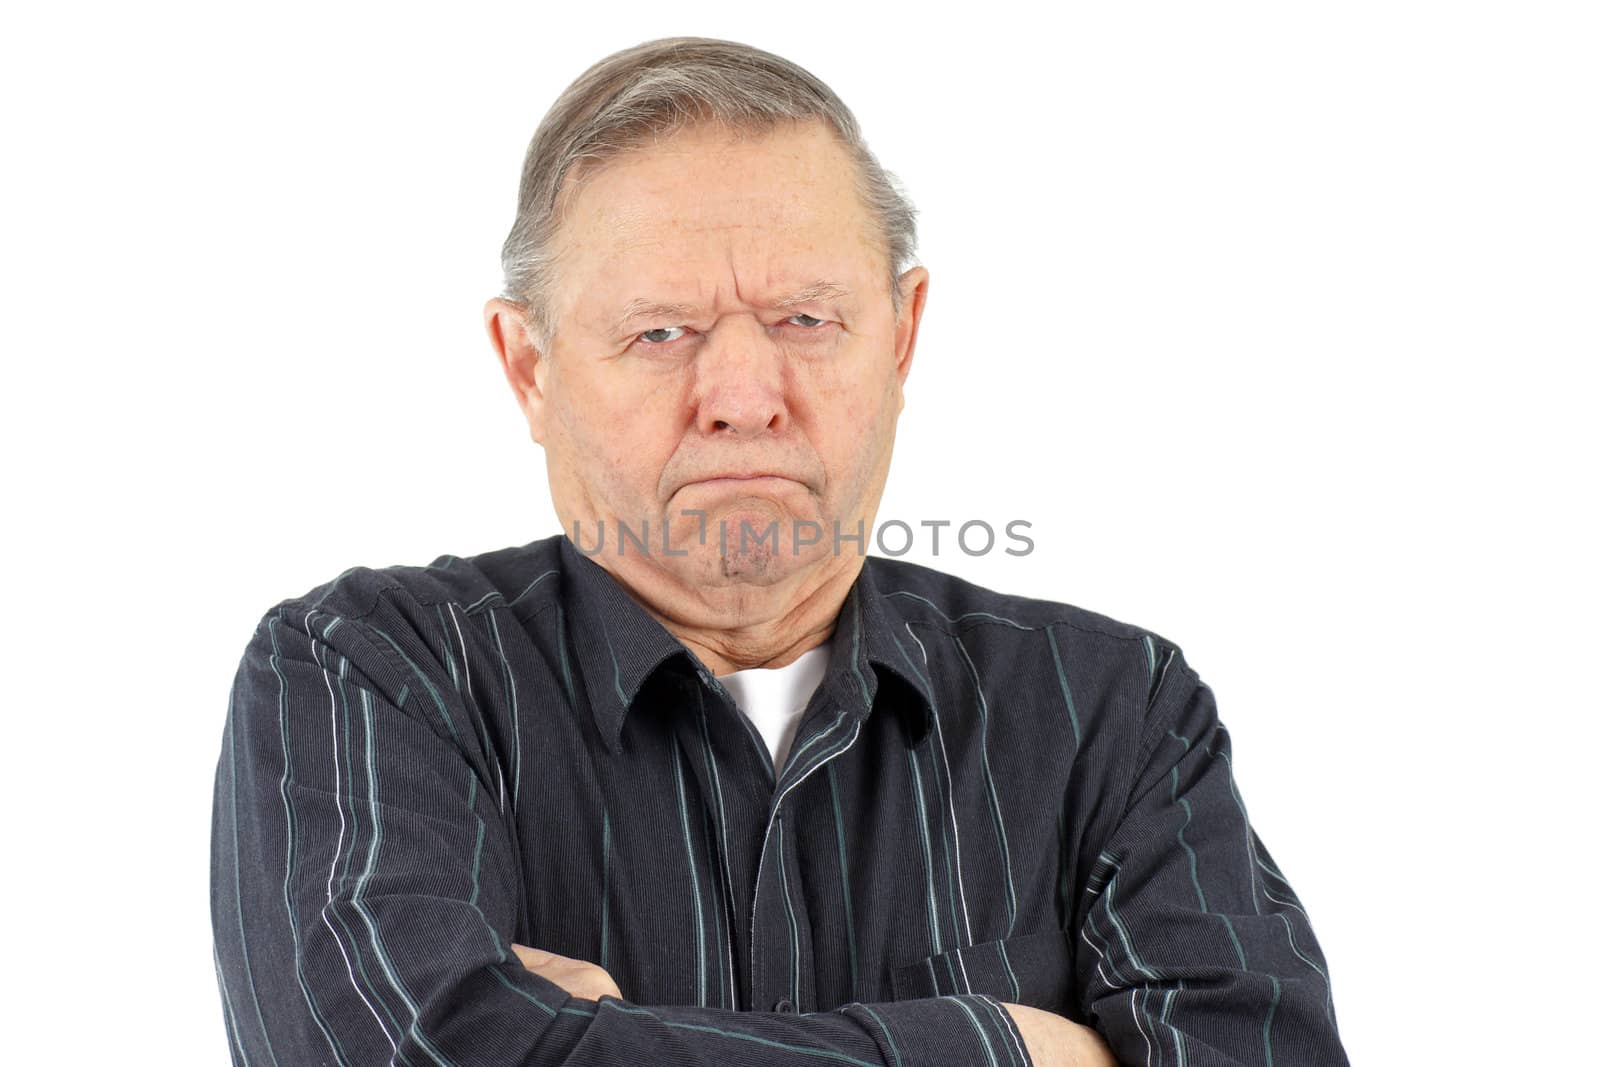 Grumpy old man by Mirage3